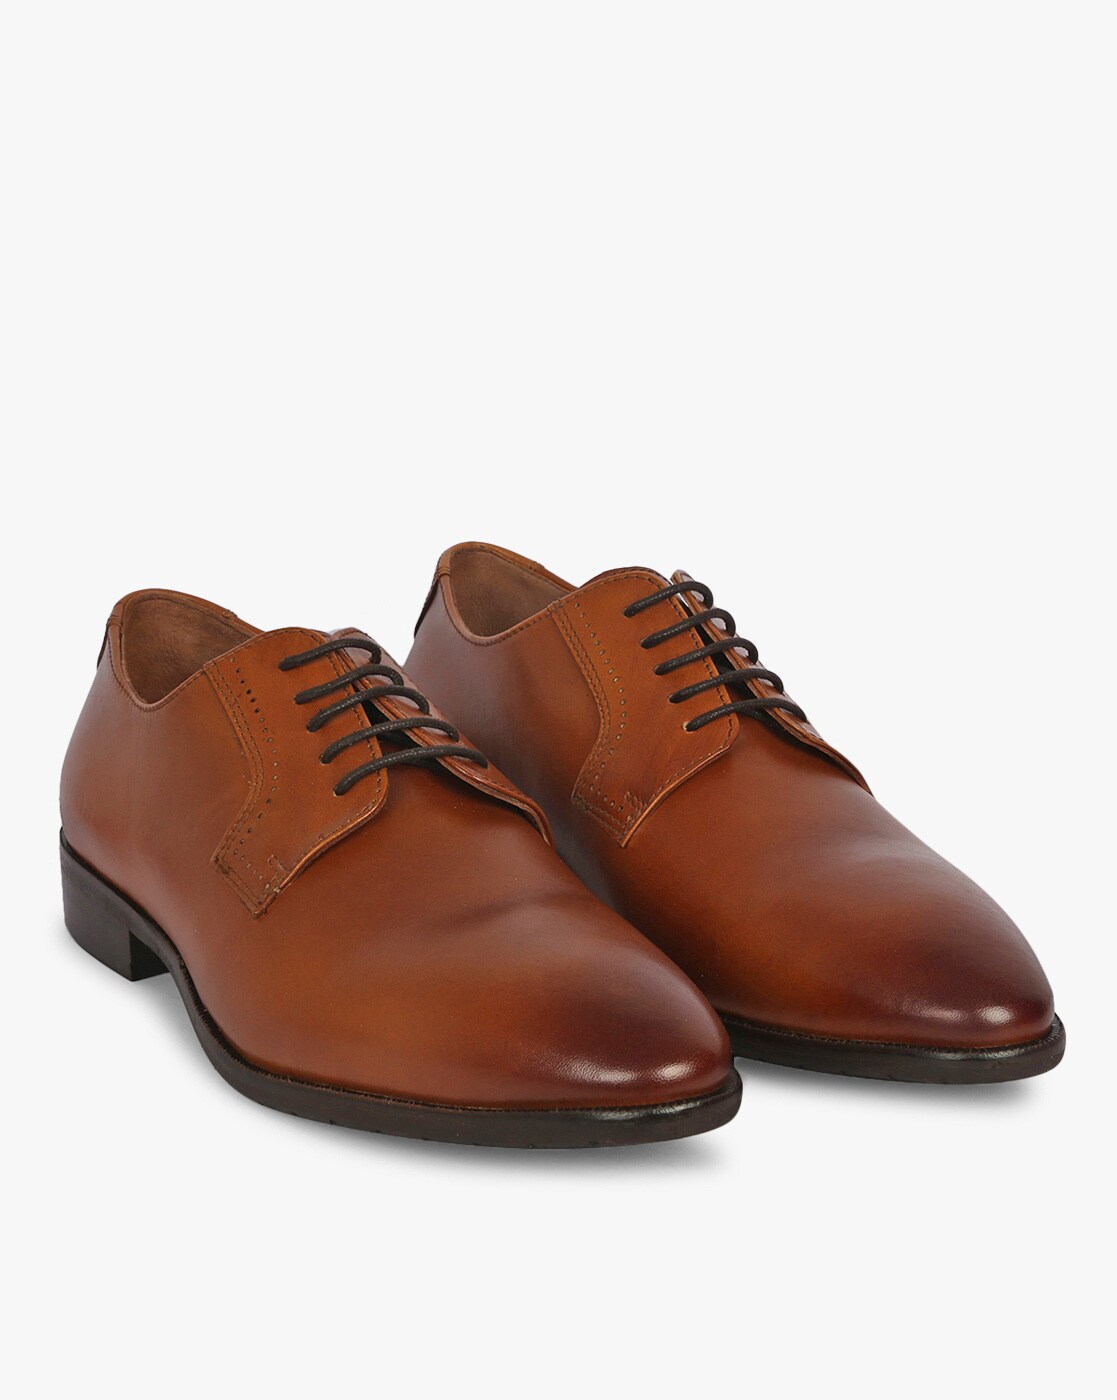 tan color leather shoes